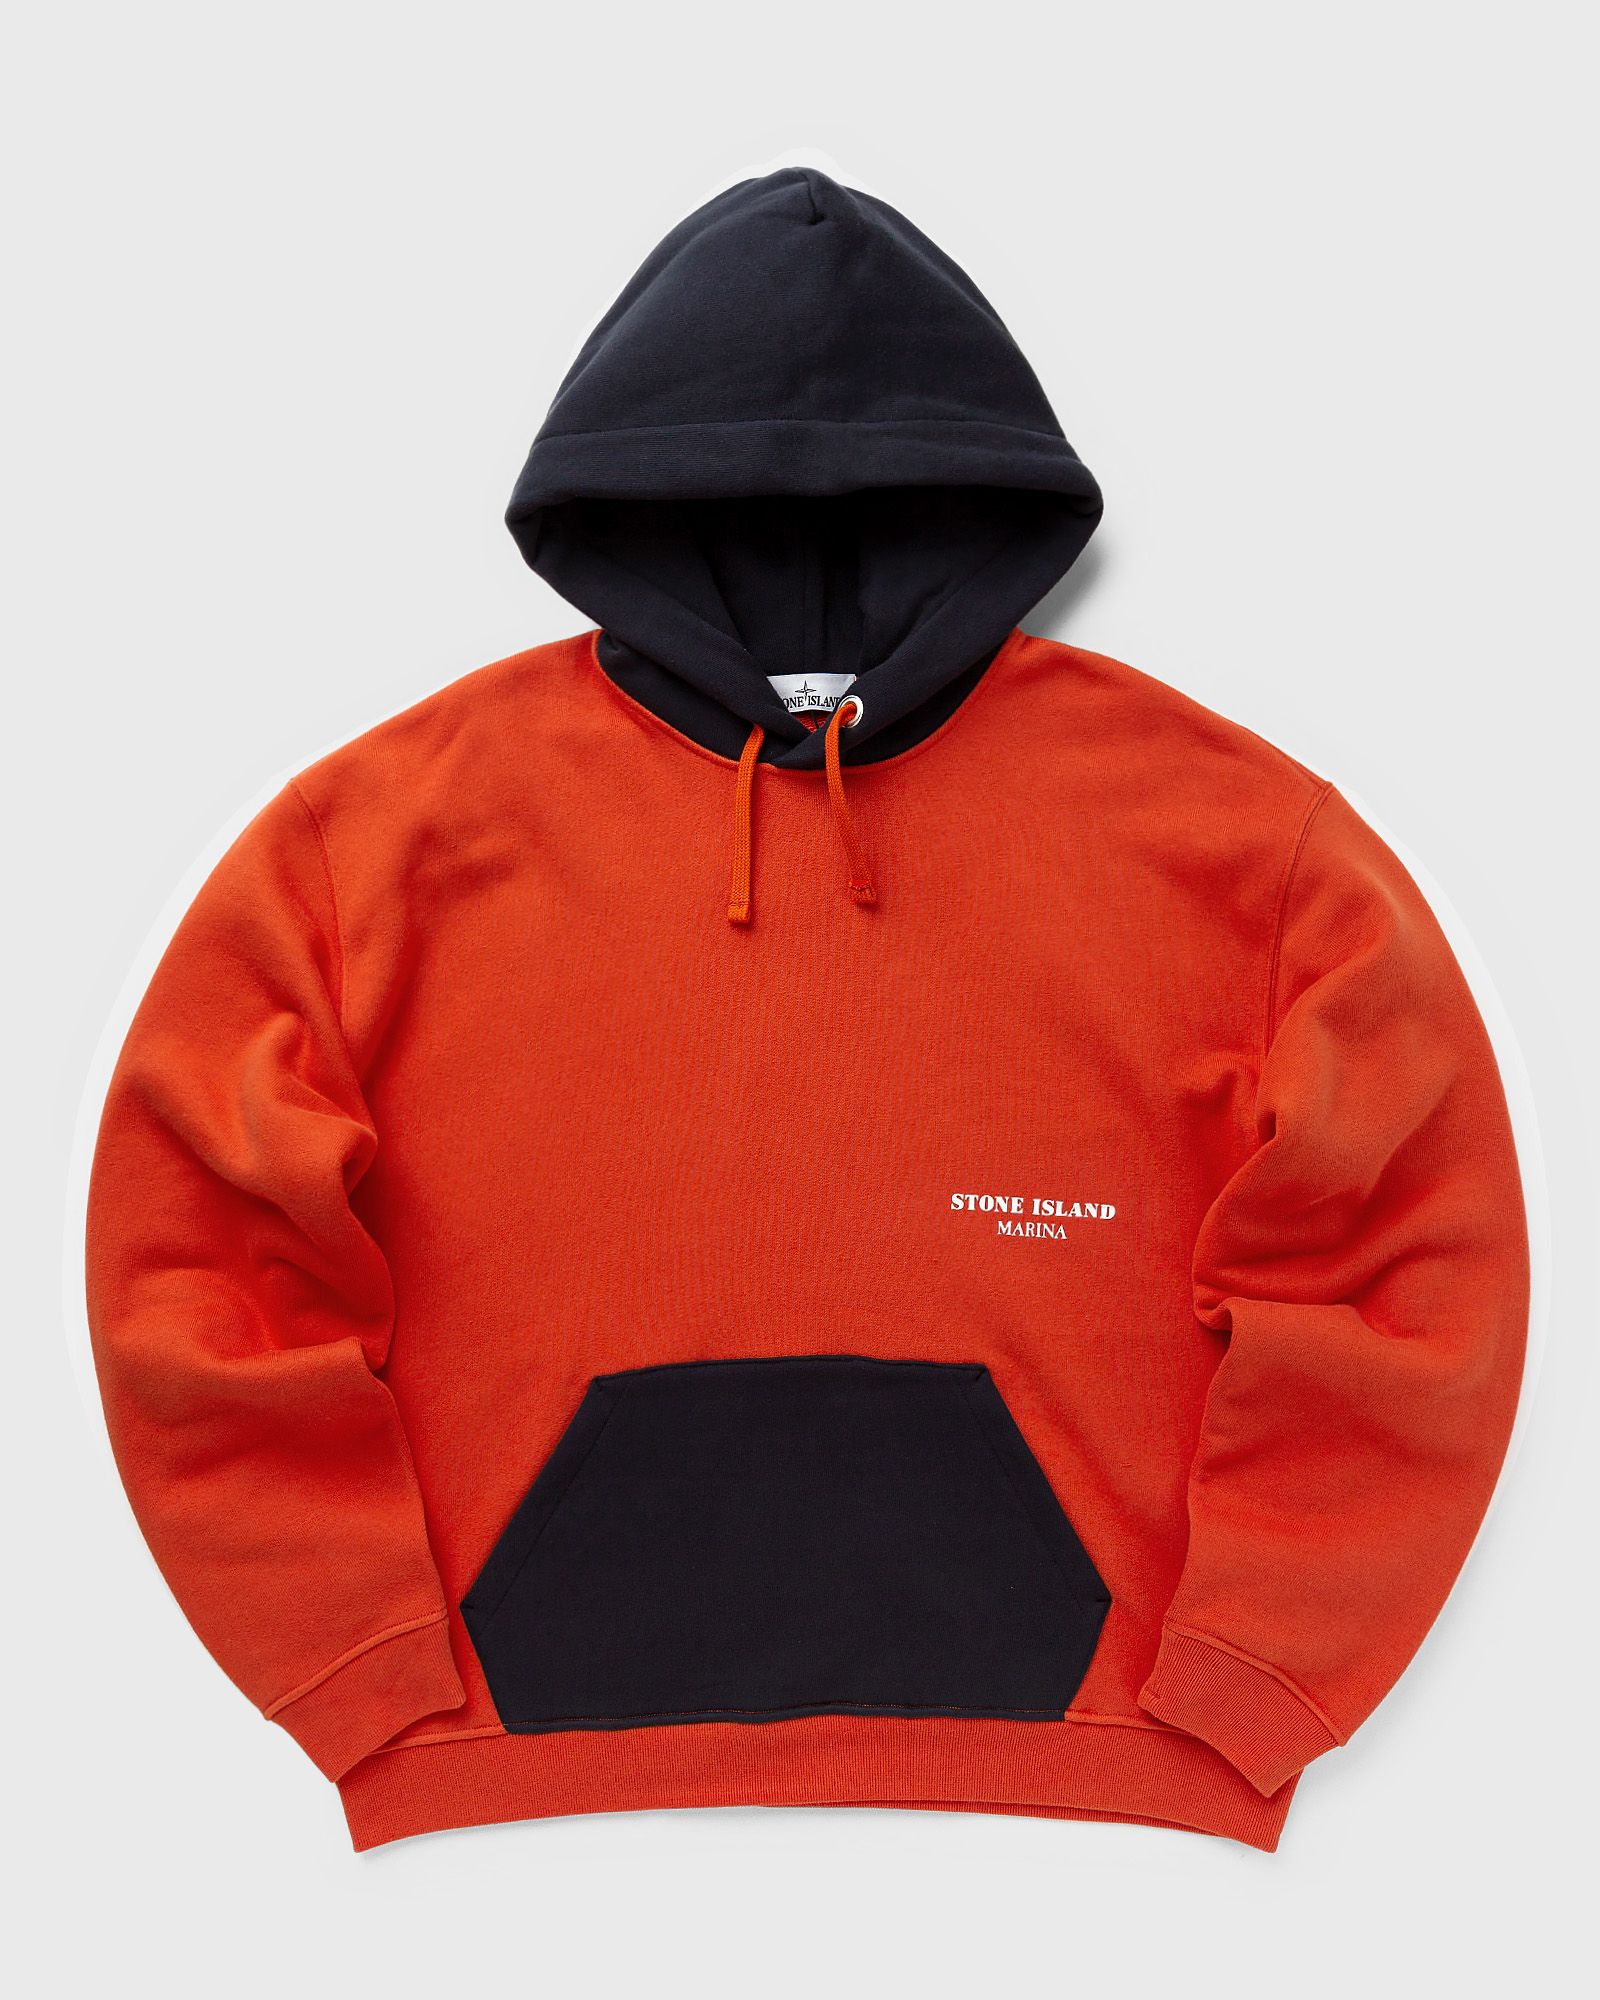 Stone Island - sweat-shirt cotton fleece_  marina men hoodies black|orange in größe:s